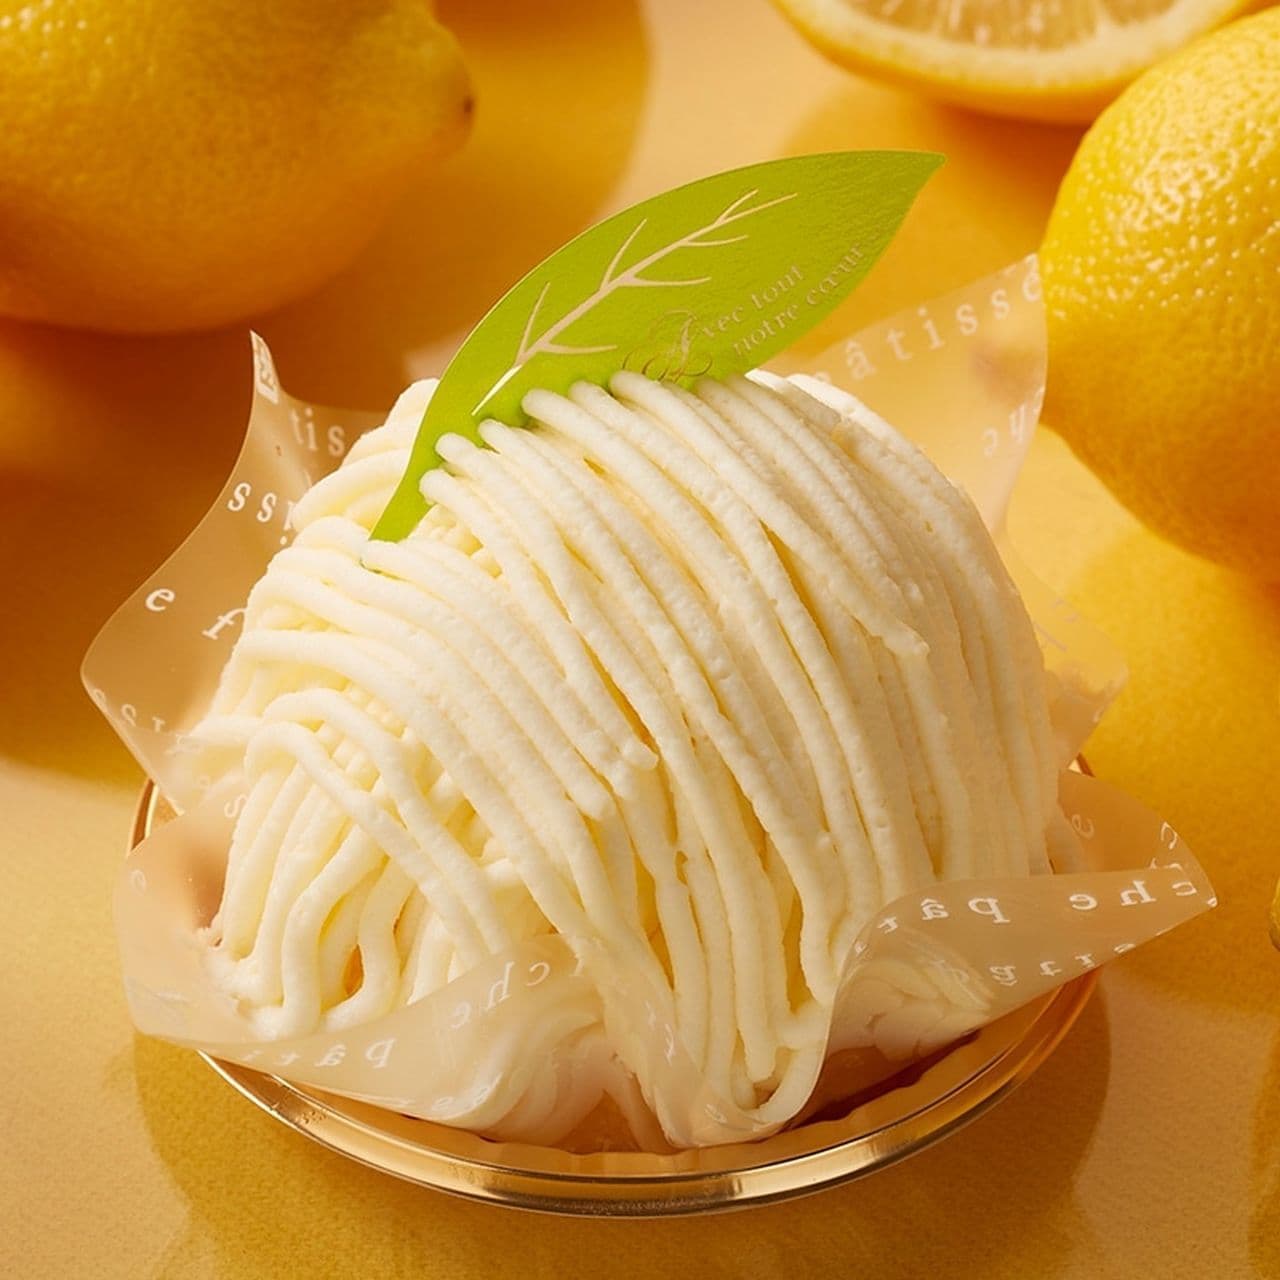 Chateraise "Lemon Cheese Mont Blanc with Hokkaido Mascarpone